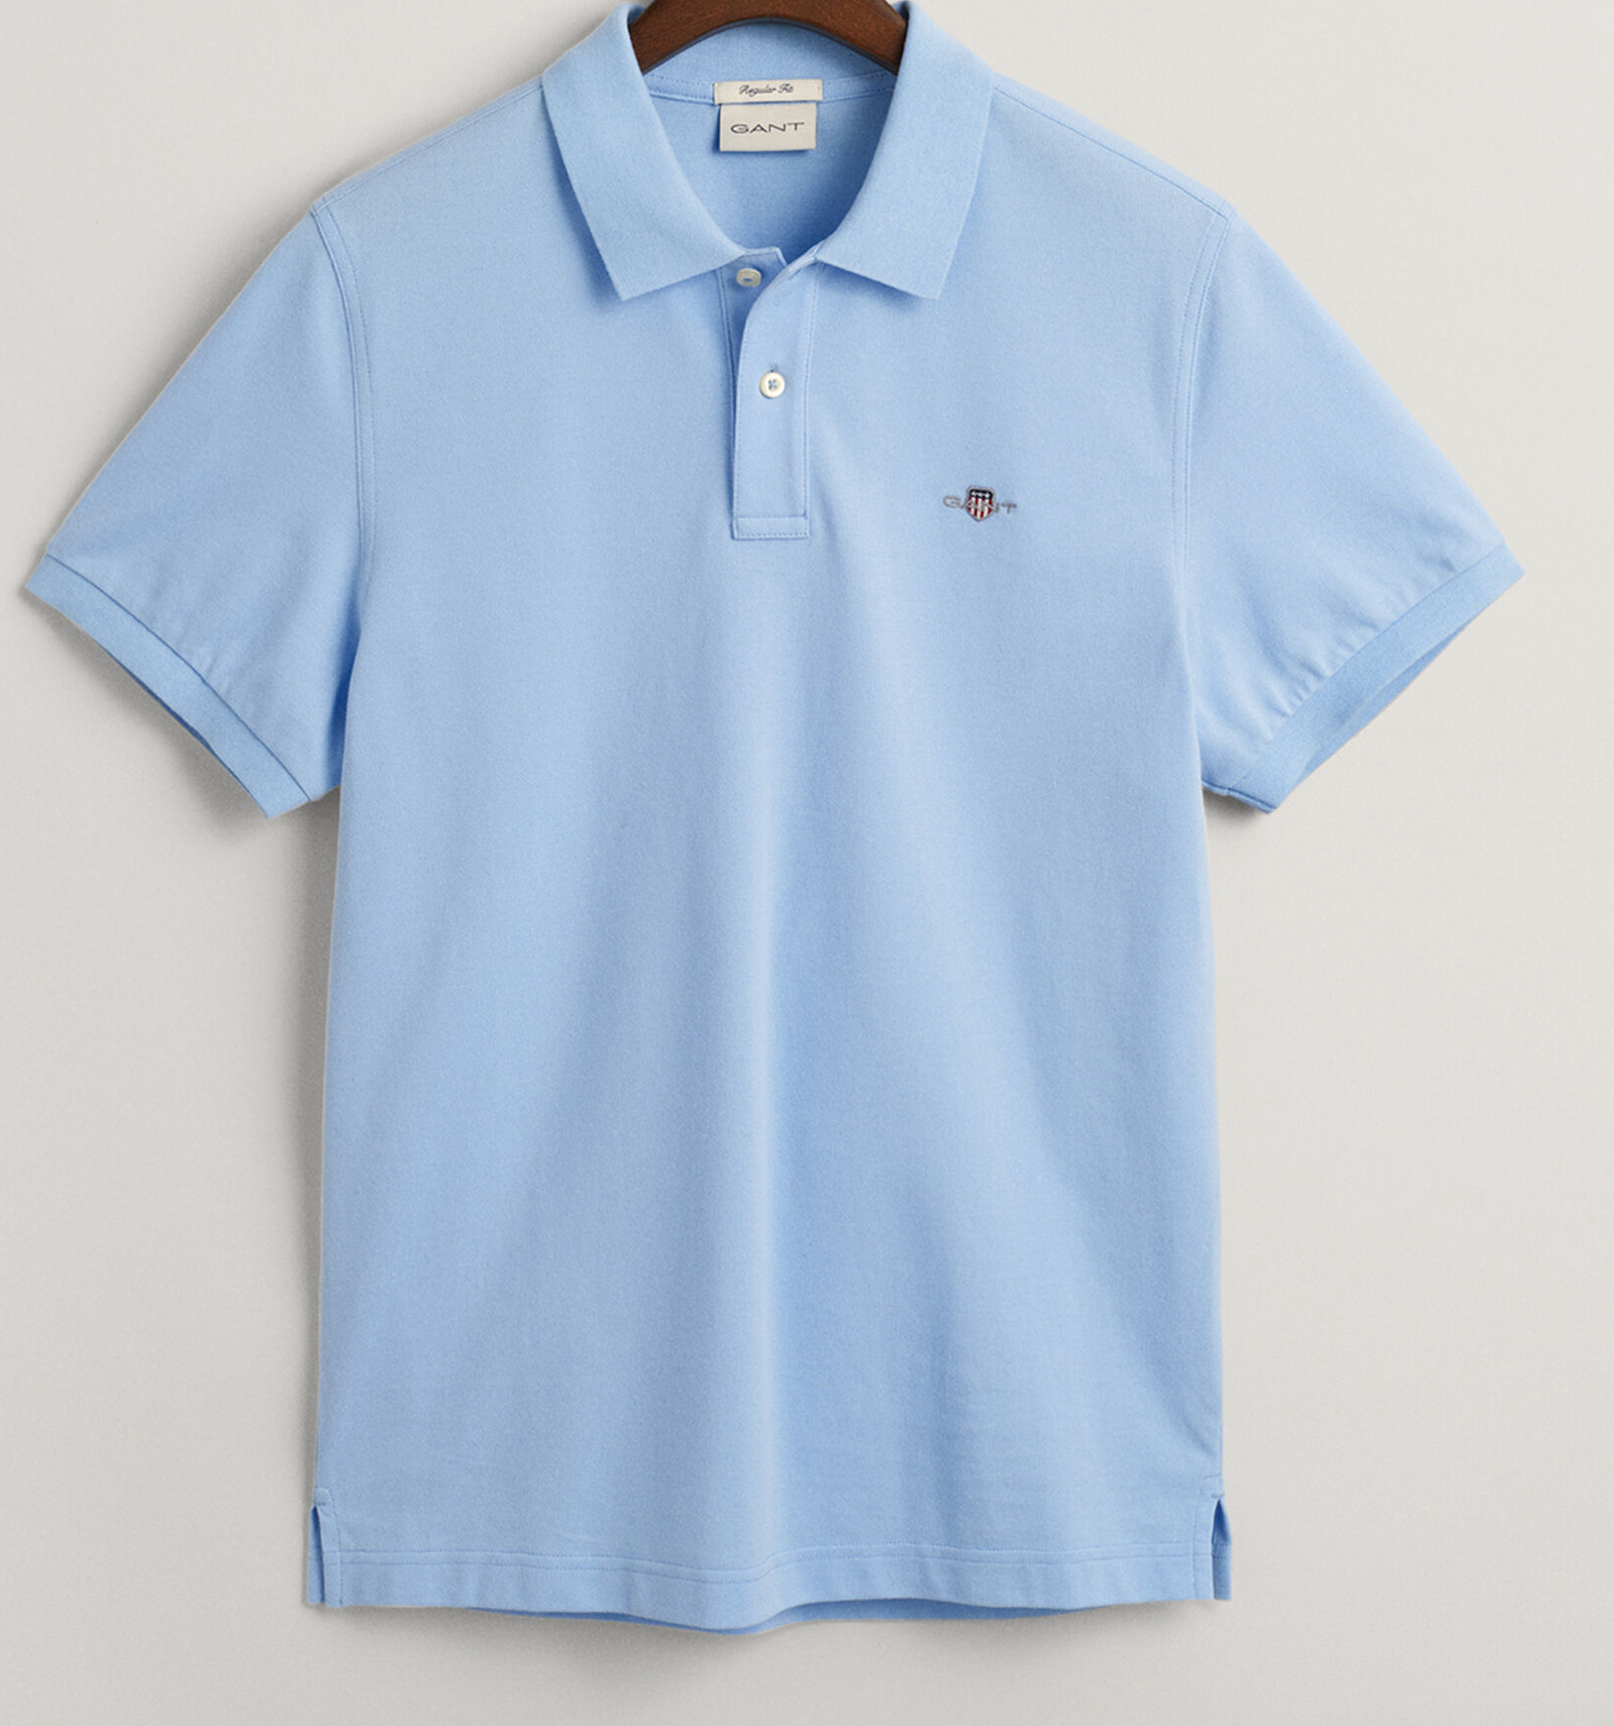 Gant "Regular Shield" Polo Shirt Capri Blue